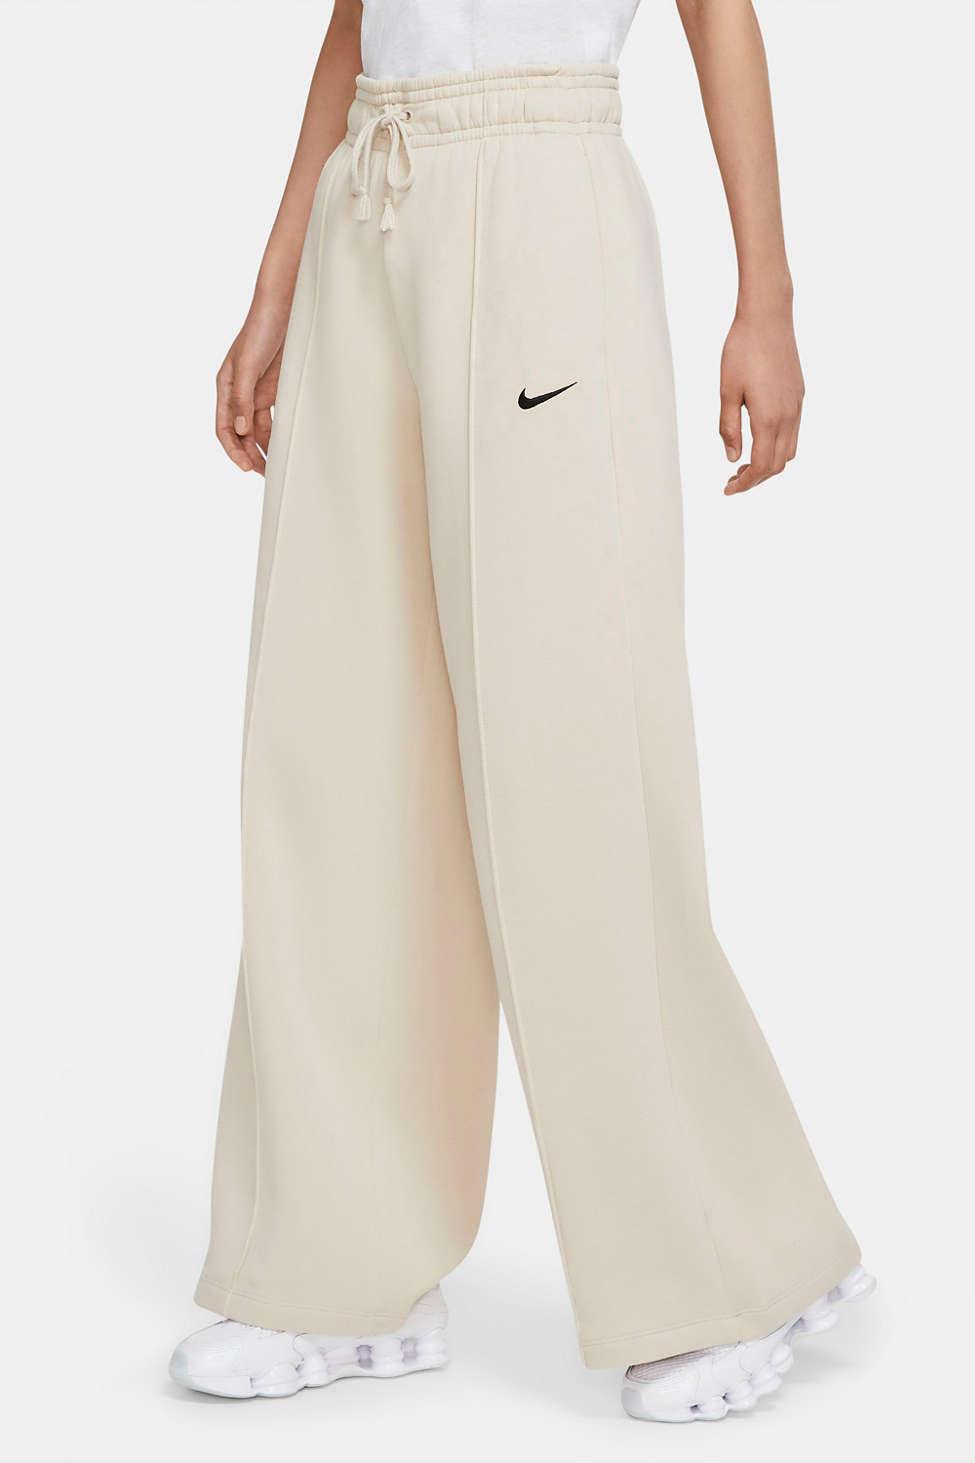 Nike Sportswear Trend Essential Fleece Pant in Natural | Lyst